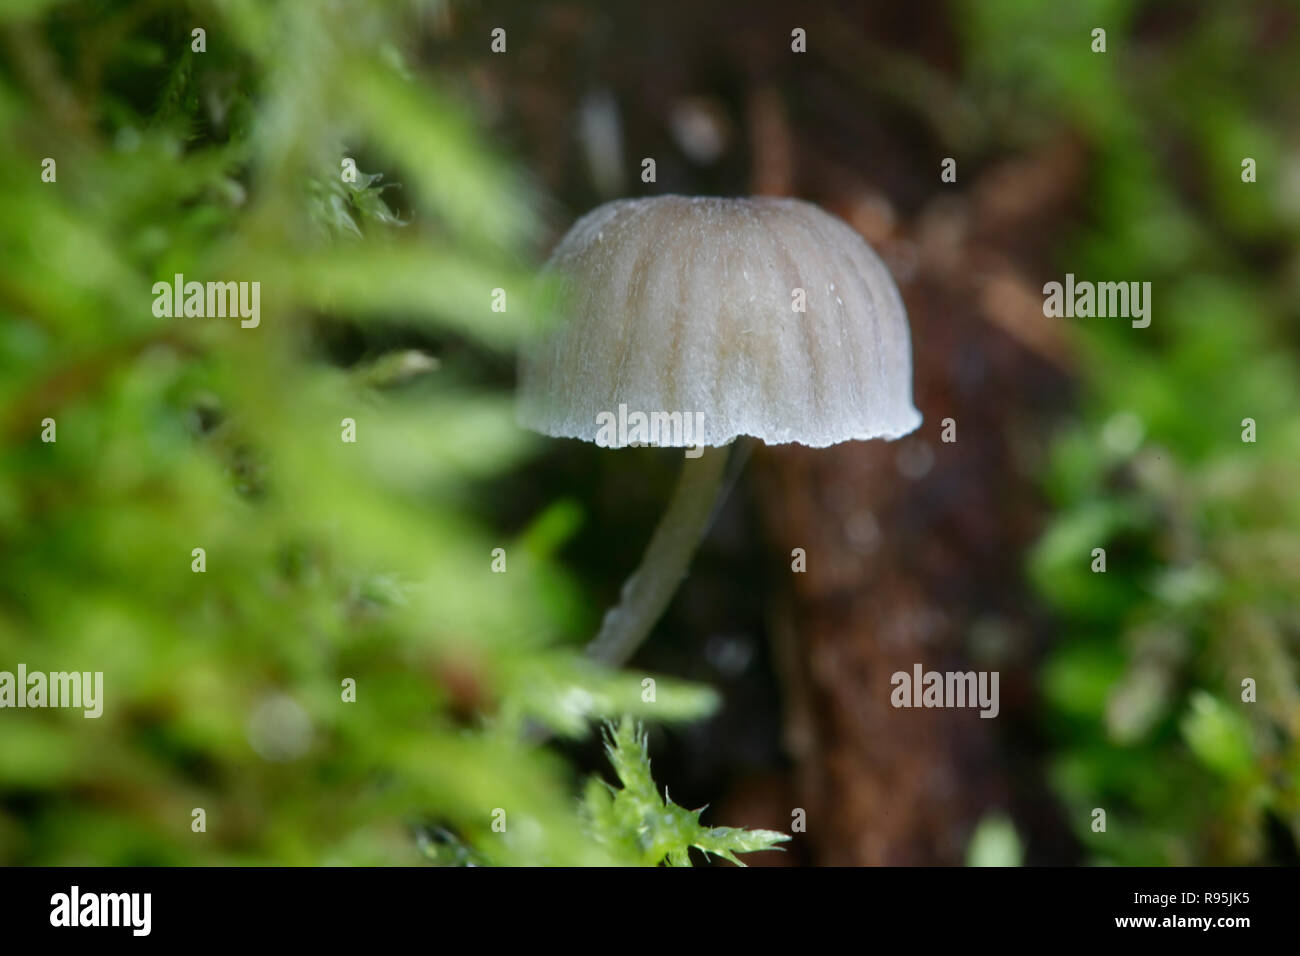 Fairy helmet bonnet mushroom, Mycena pseudocorticola Stock Photo